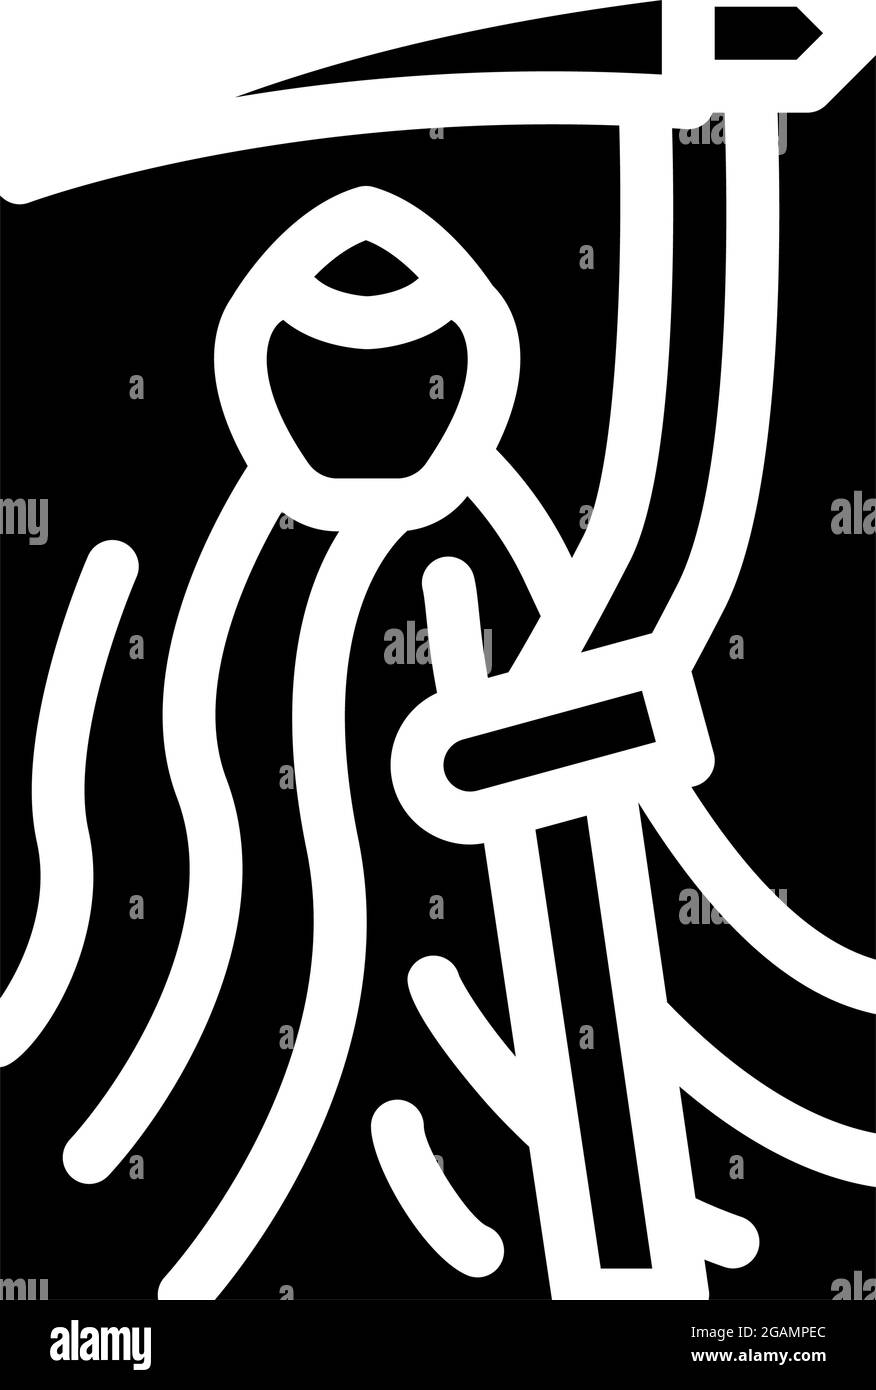 grim reaper glyph icon vector illustration Stock Vector